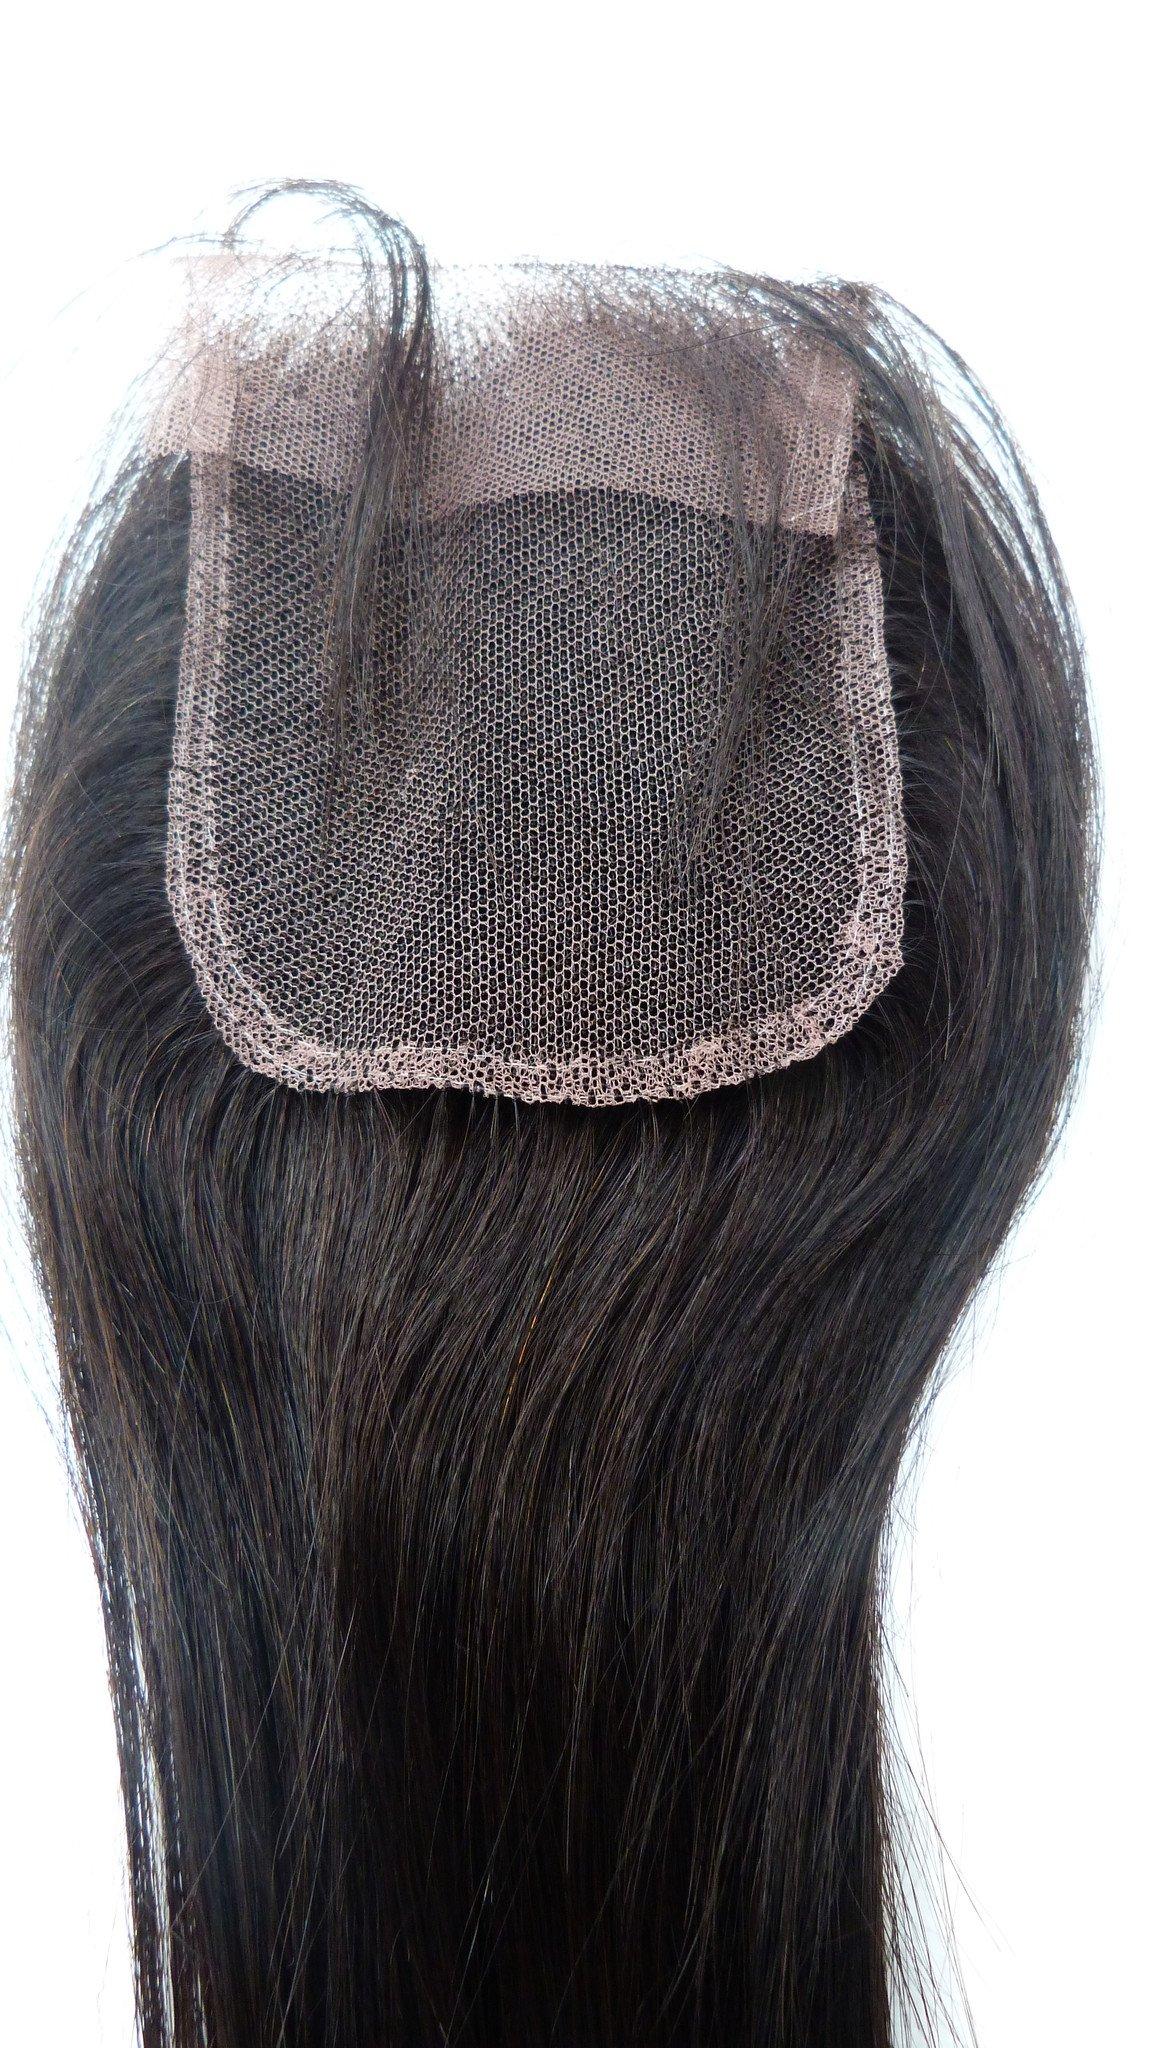 Indischer Virgin-Remy-Spitzenverschluss – 8,9 x 10,2 cm – Virgin Hair & Beauty, die besten Haarverlängerungen, echtes Virgin-Menschenhaar.